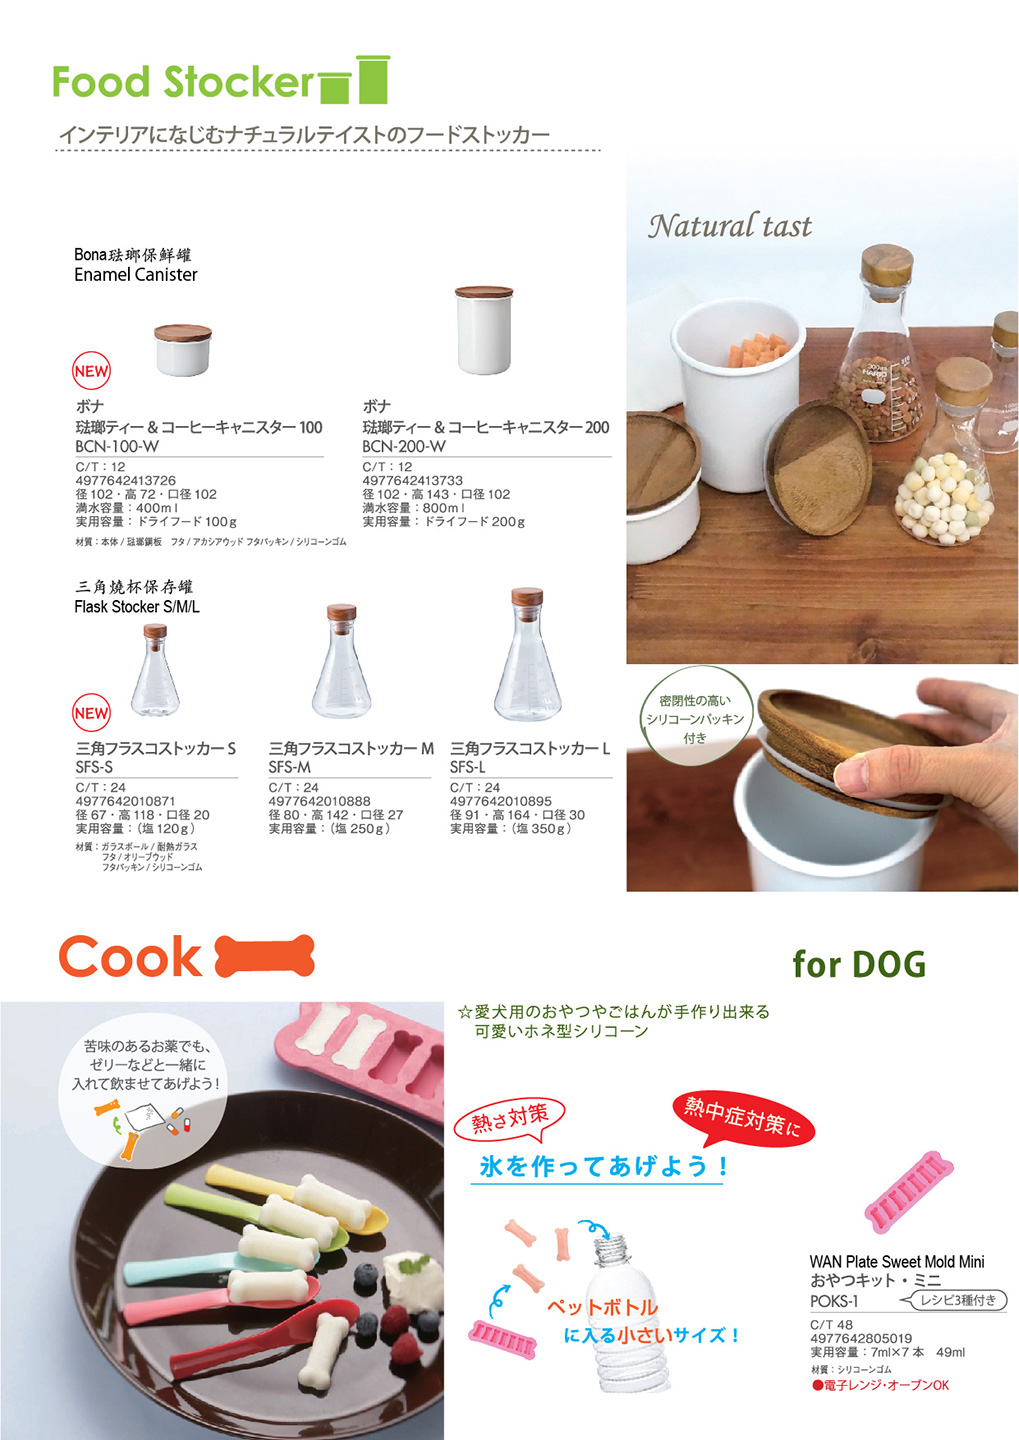 HARIO, Pet goods, Made in Japan, Dog, Food Stocker, Natural tast, Cook, BCN-100-W, BCN-200-W, SFS-S, SFS-M, SFS-L, POKS-1